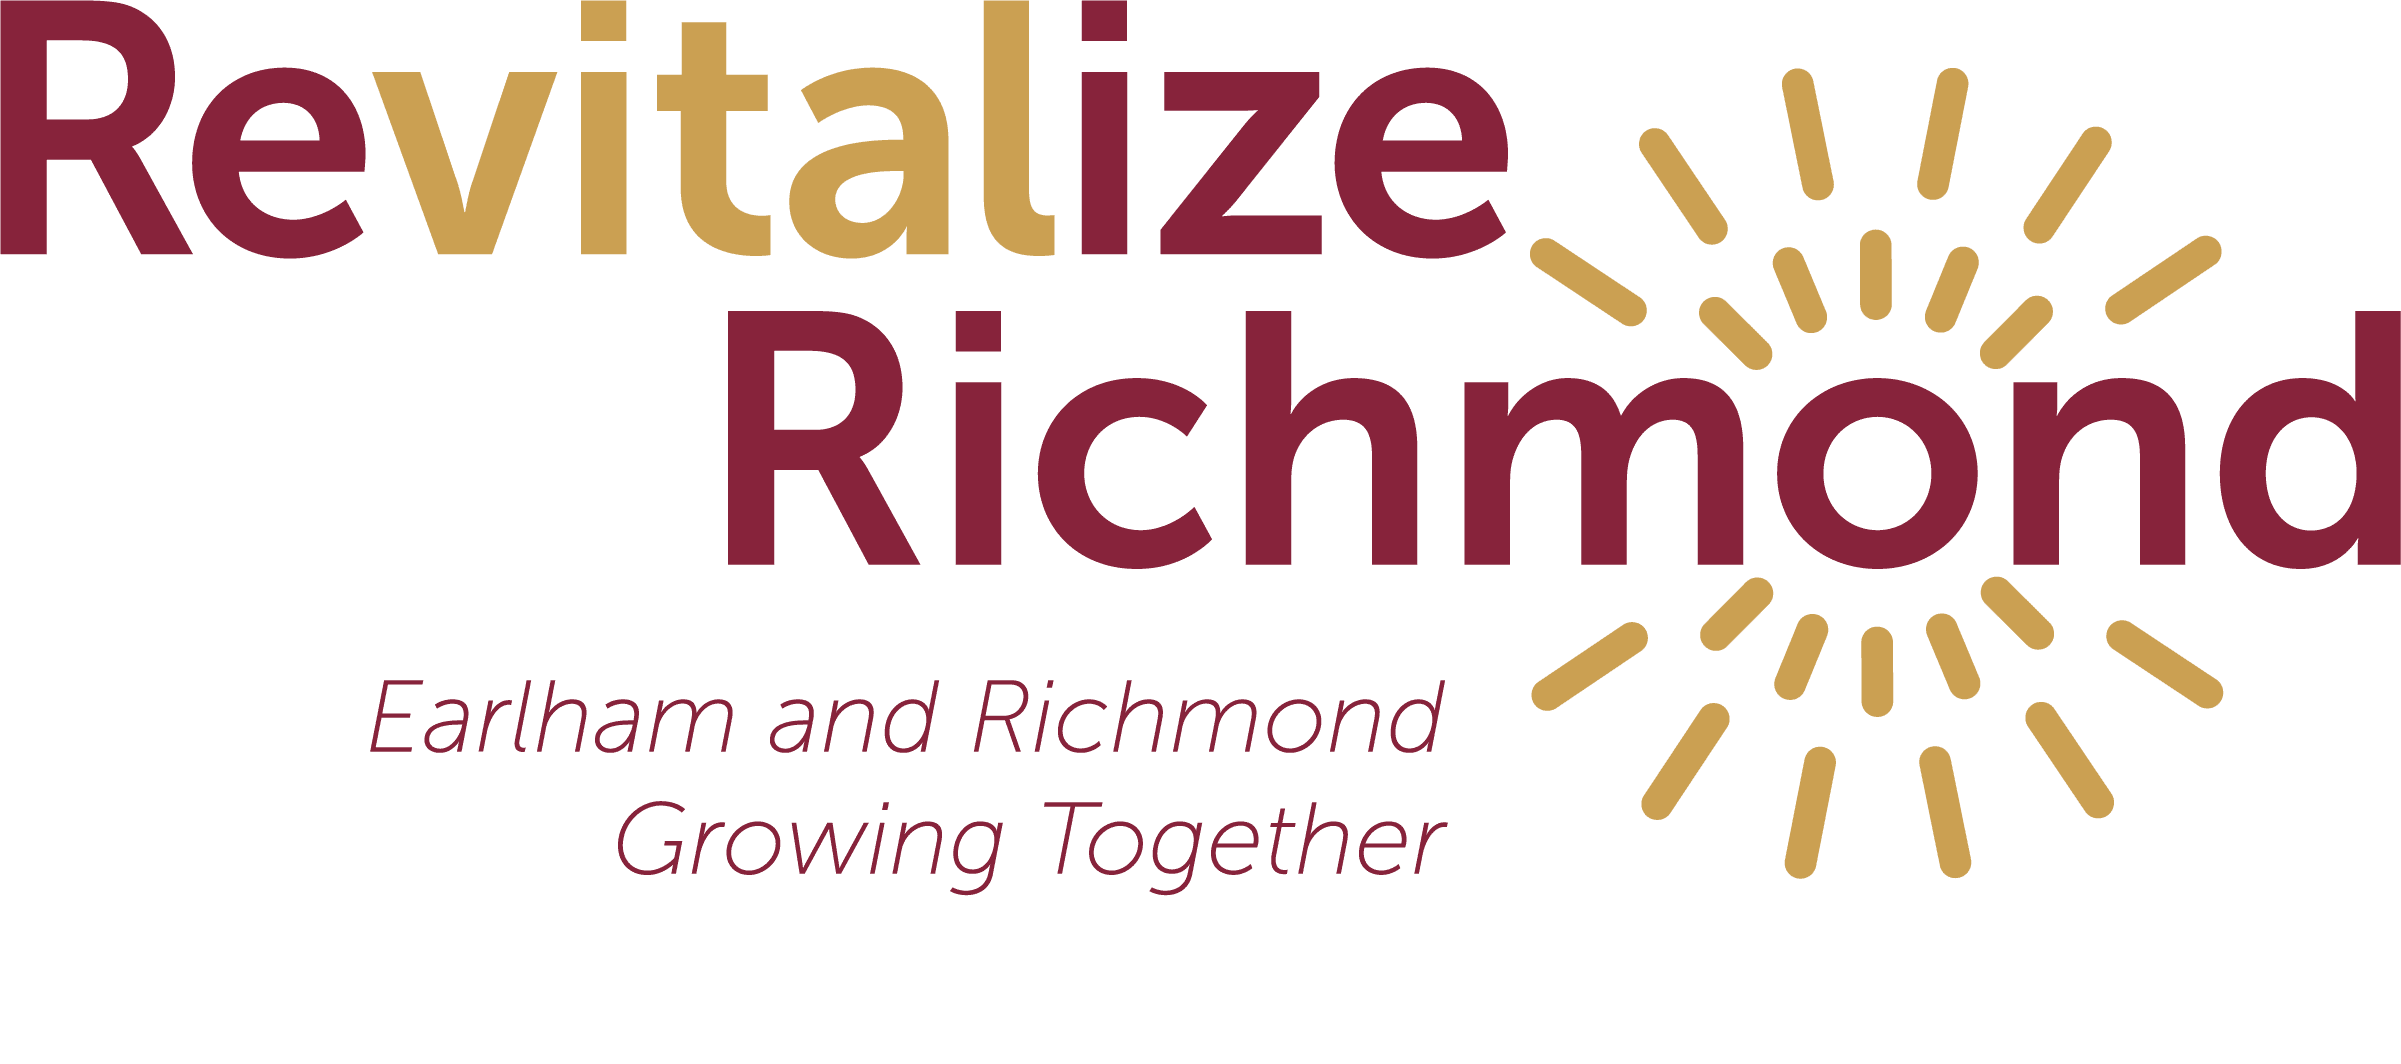 Revitalize Richmond logo with tagline